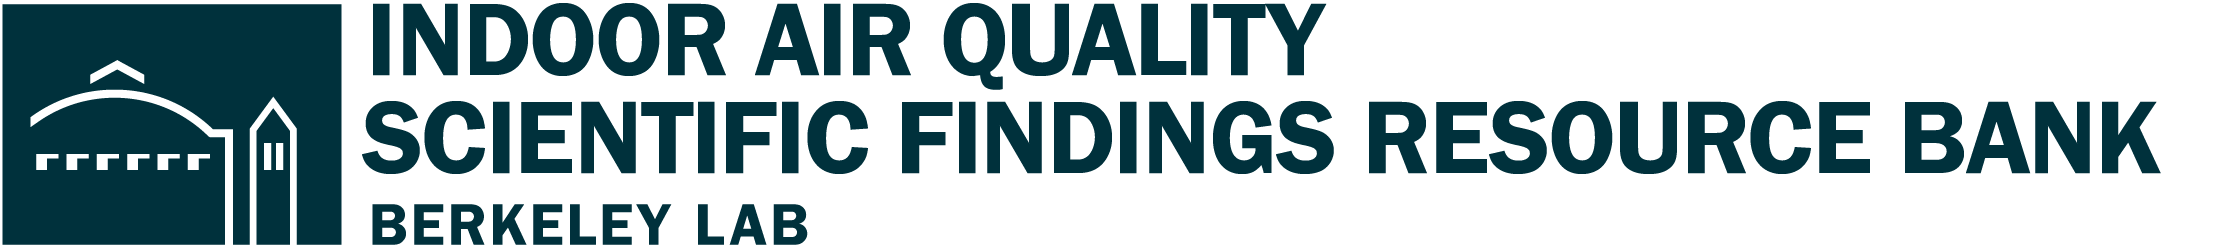 Indoor Air Quality Scientific Findings Resource Bank Logo